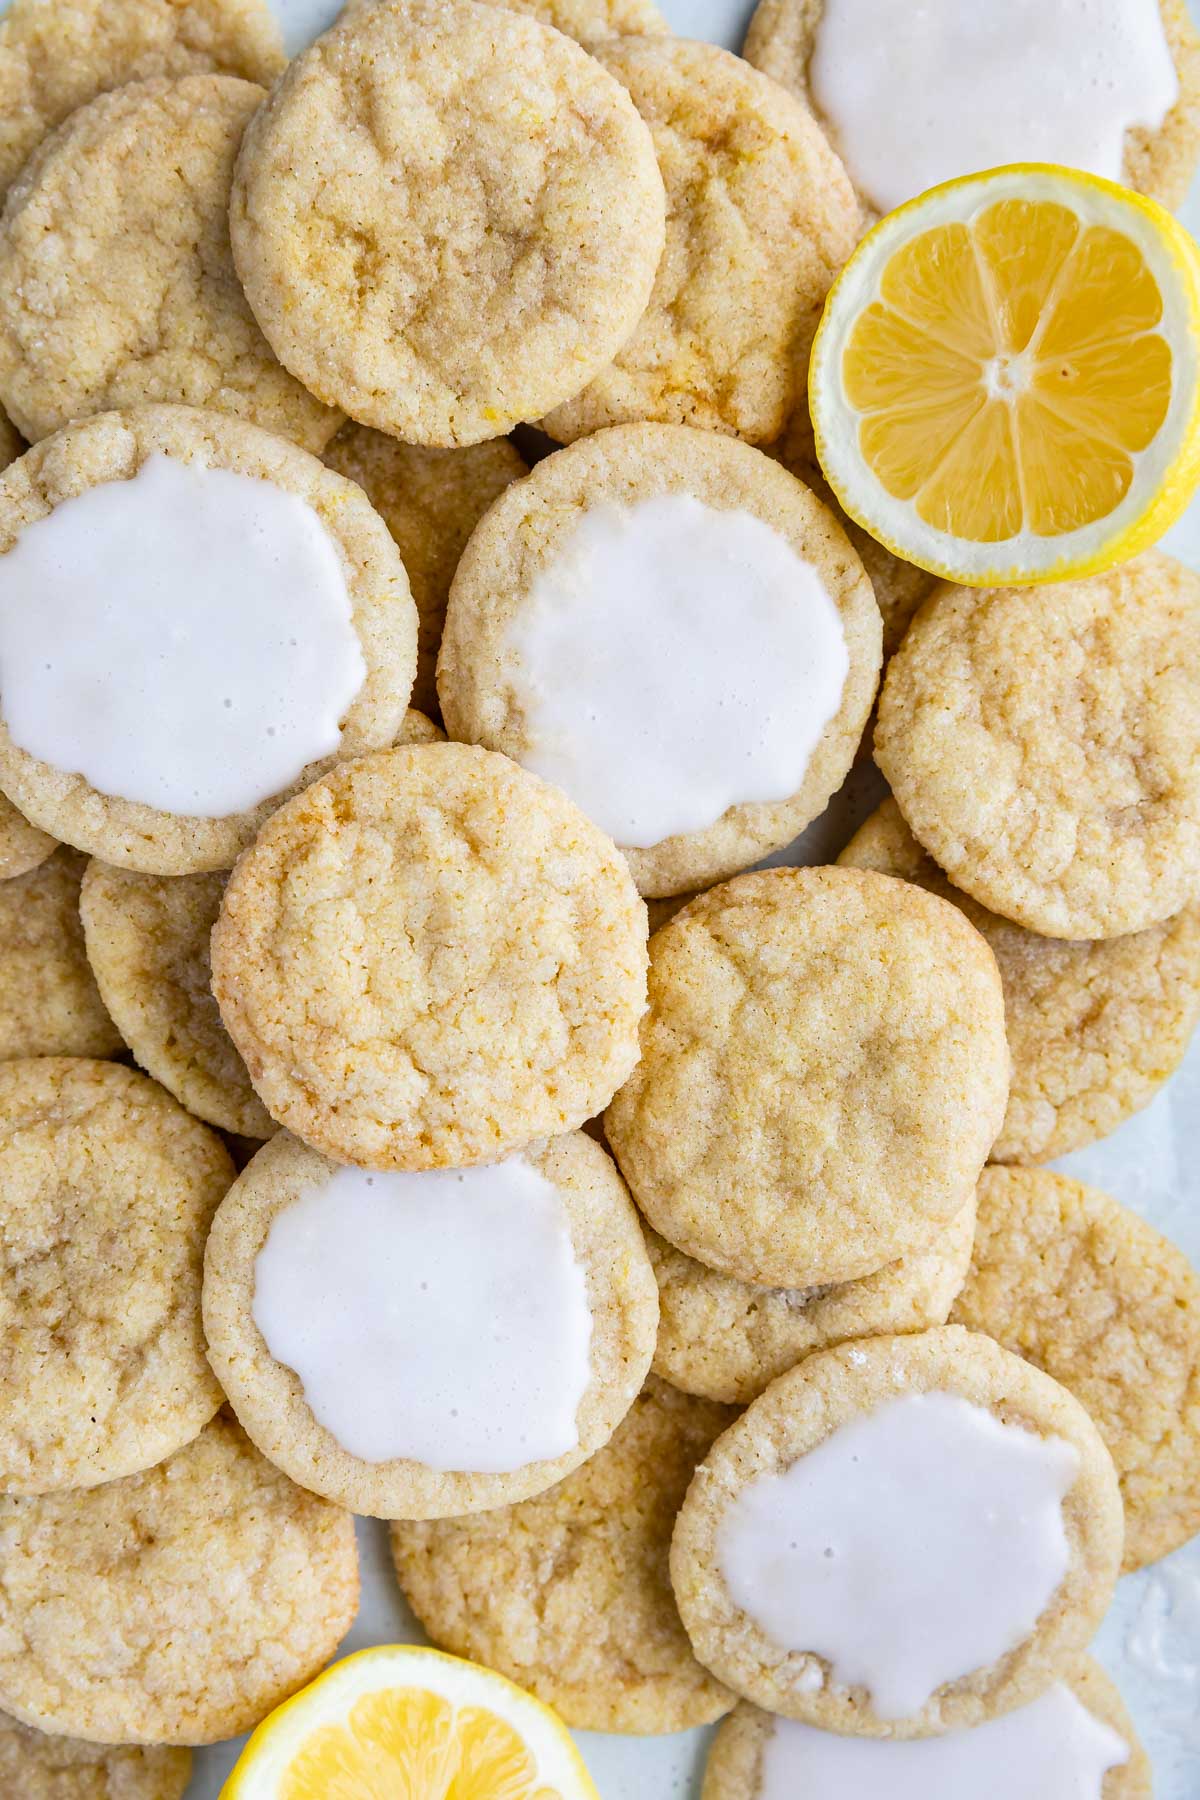 Overhead shot of lemon cookies mixed with lemon slices and iced lemon cookies